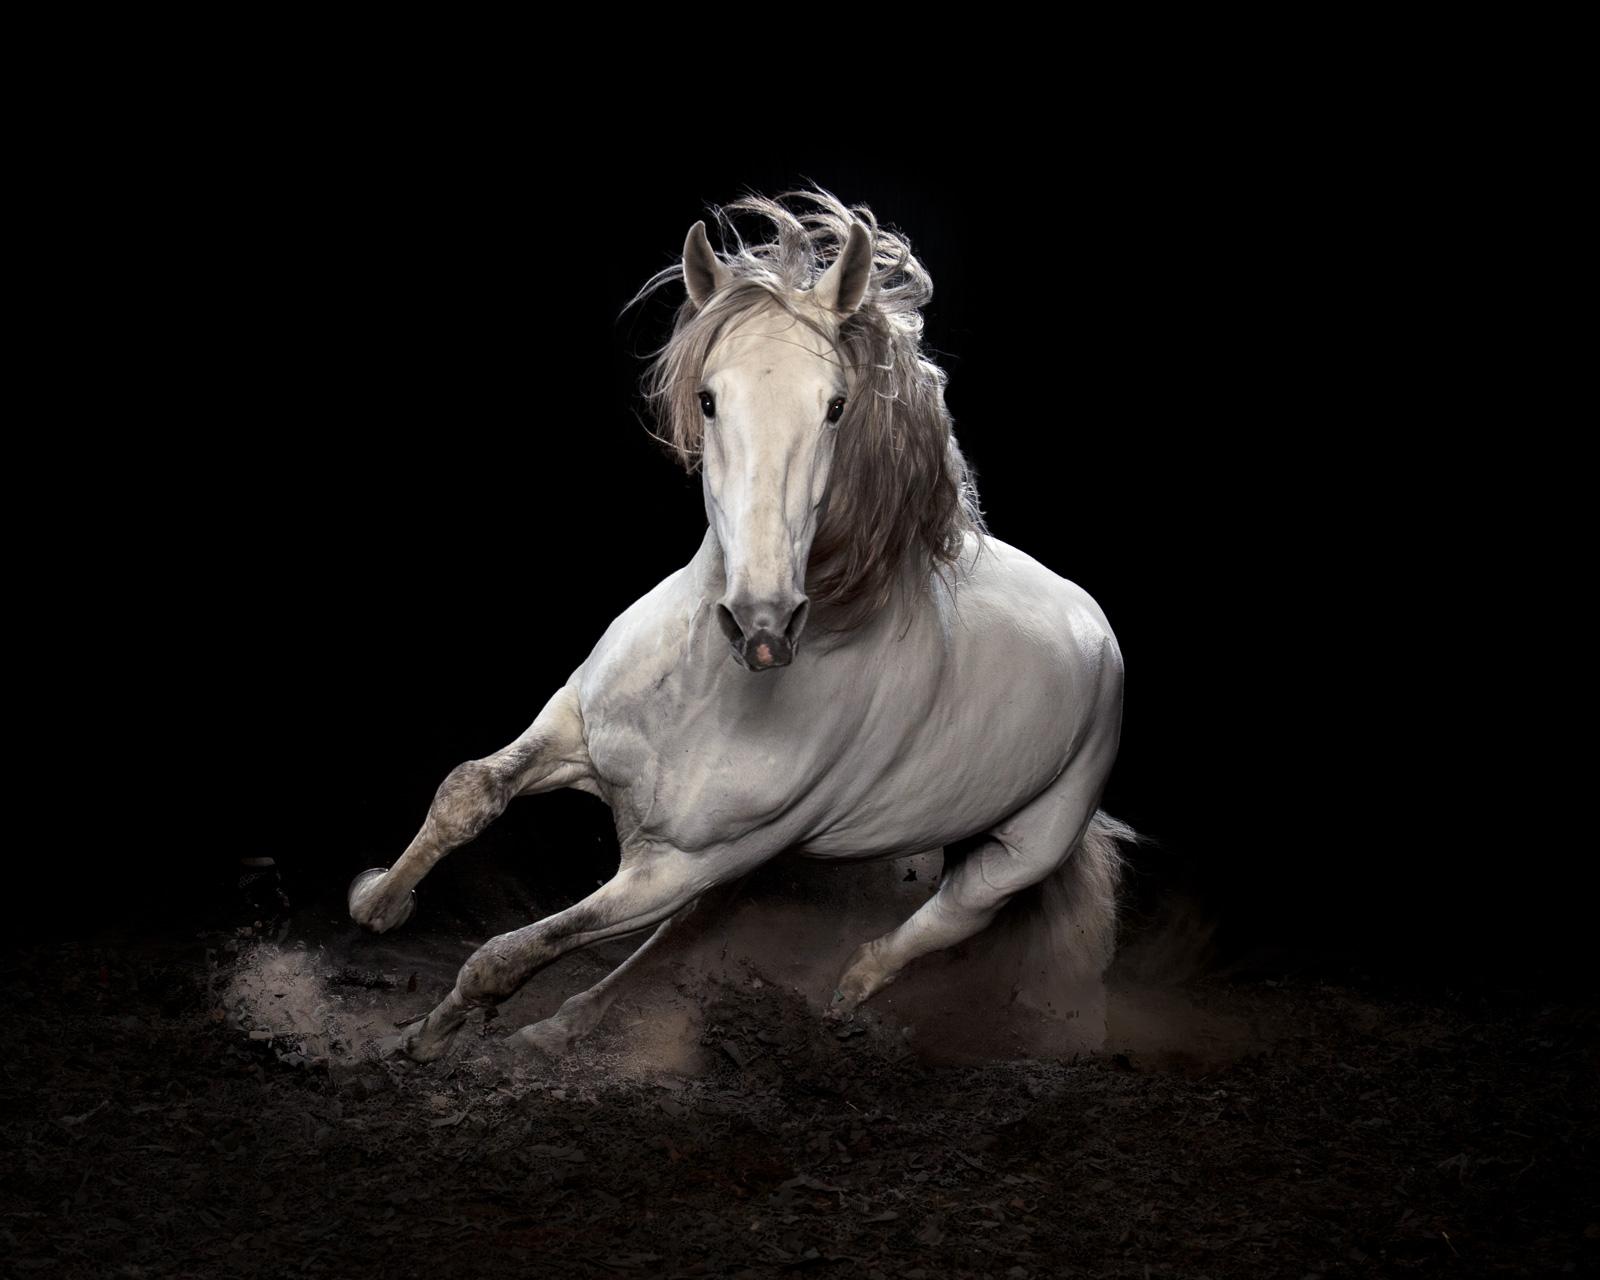 Tim Platt Color Photograph - "Ehpico d’ Atela” pure bred Lusitano stallion #1 - Signed limited edition print